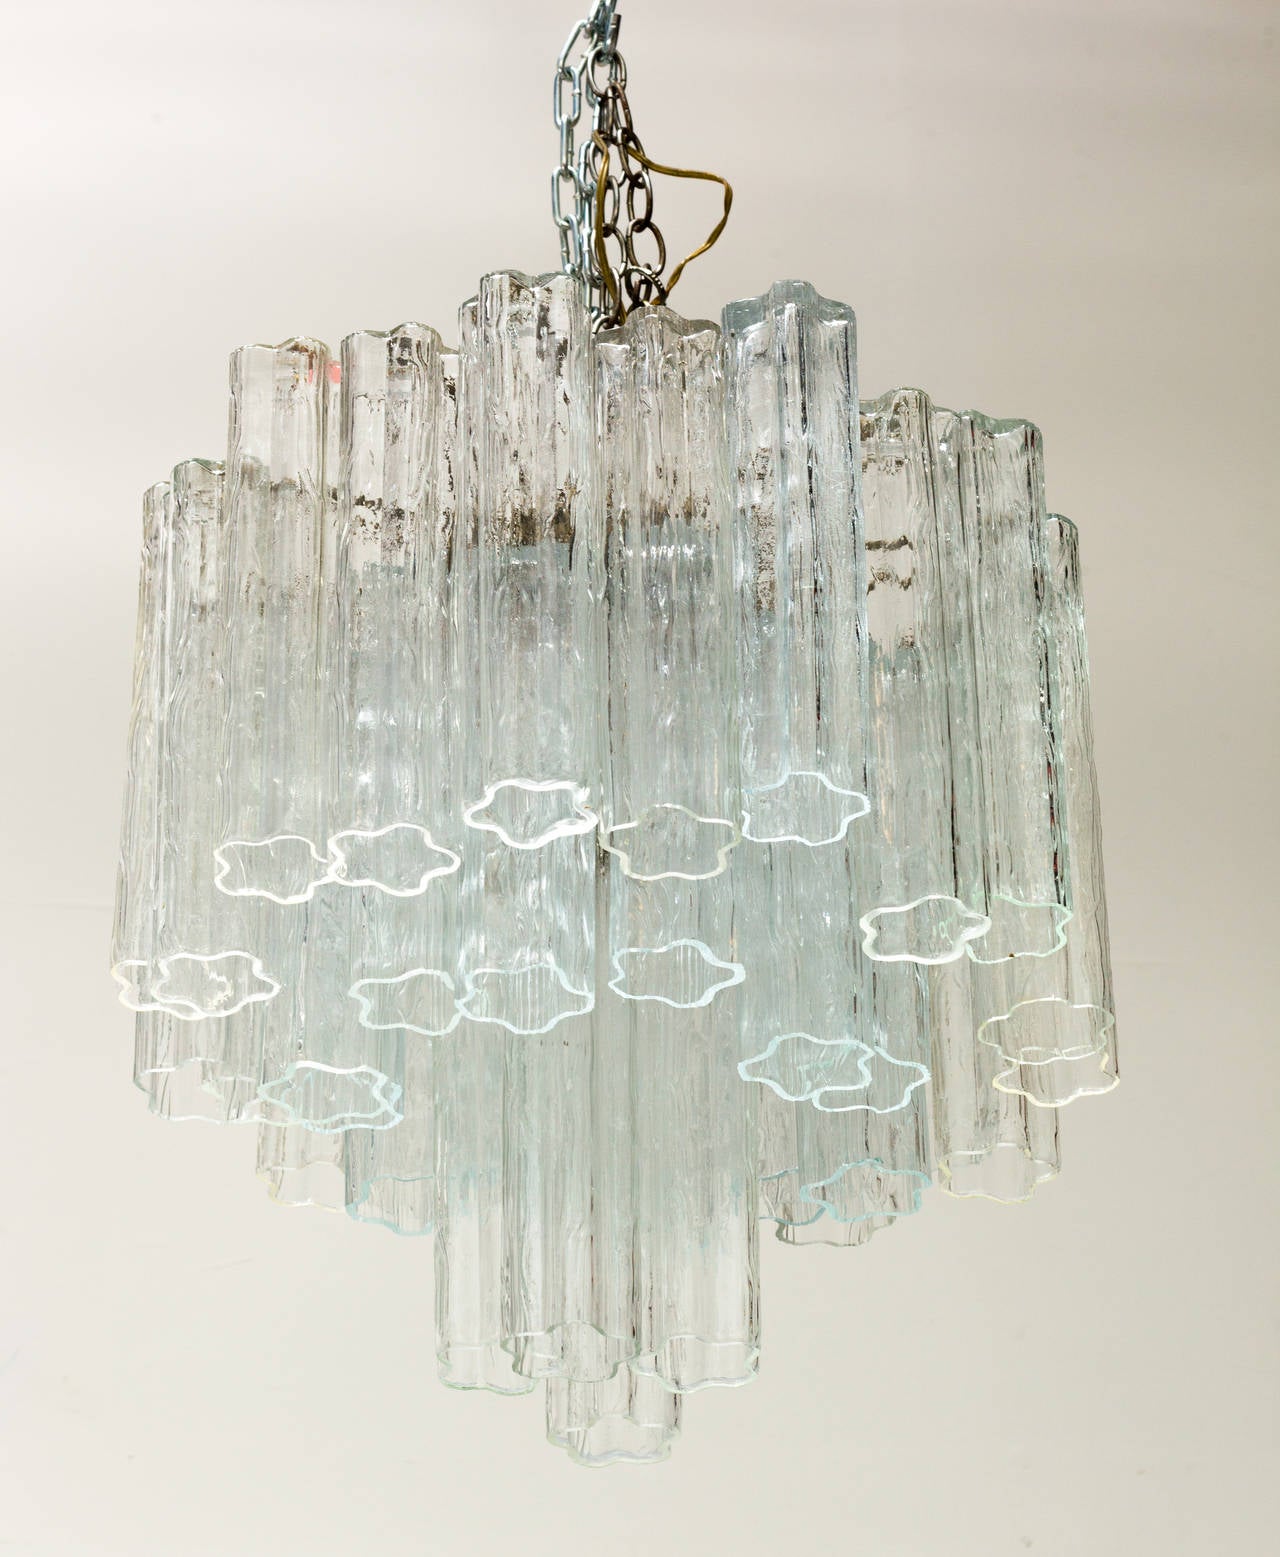 Camer glass chandelier, marked 